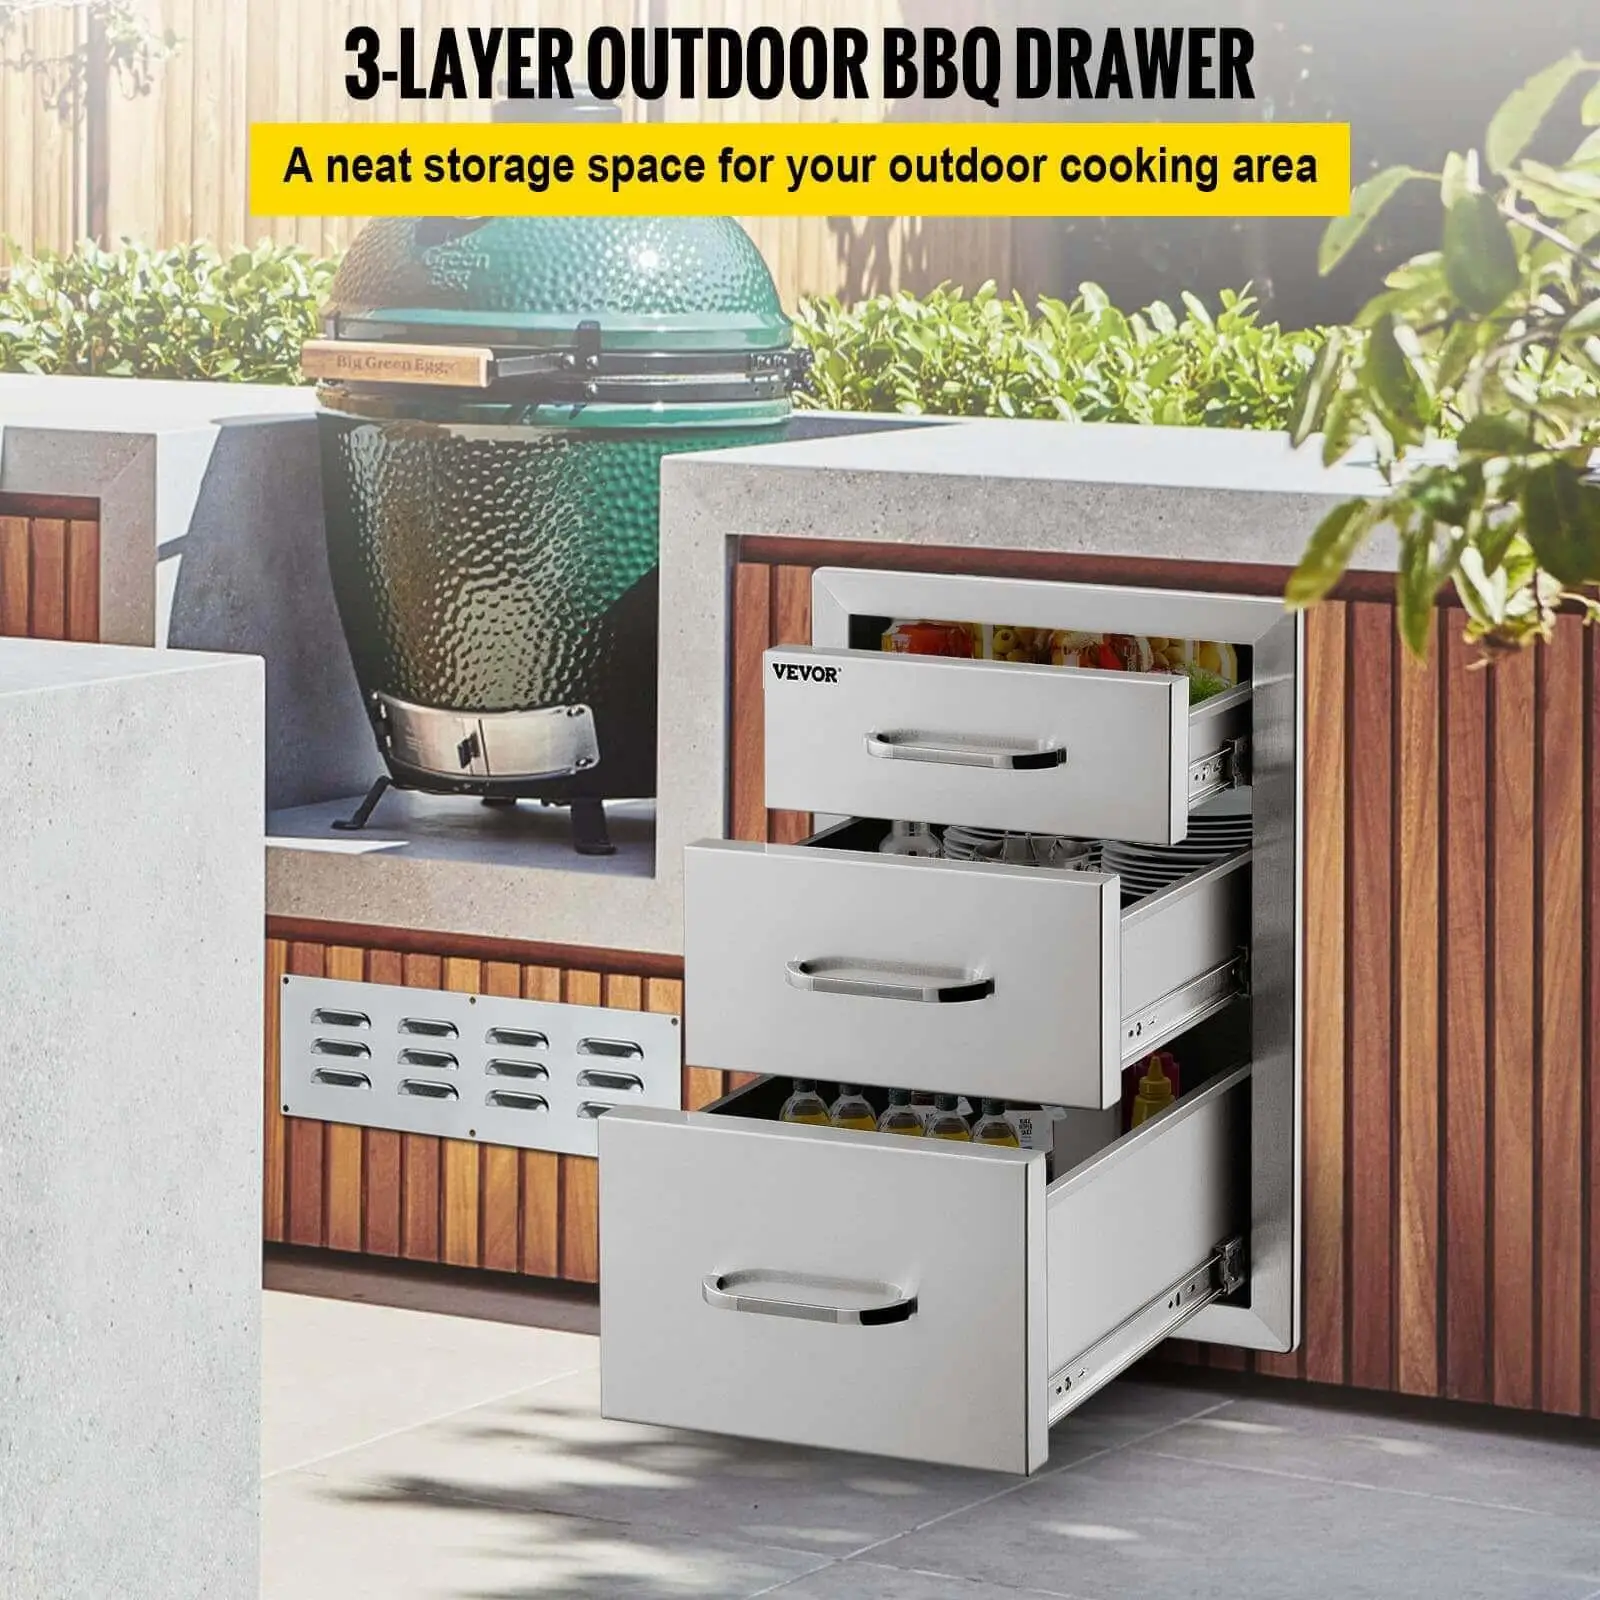 VEVOR outdoor stainless steel kitchen drawers